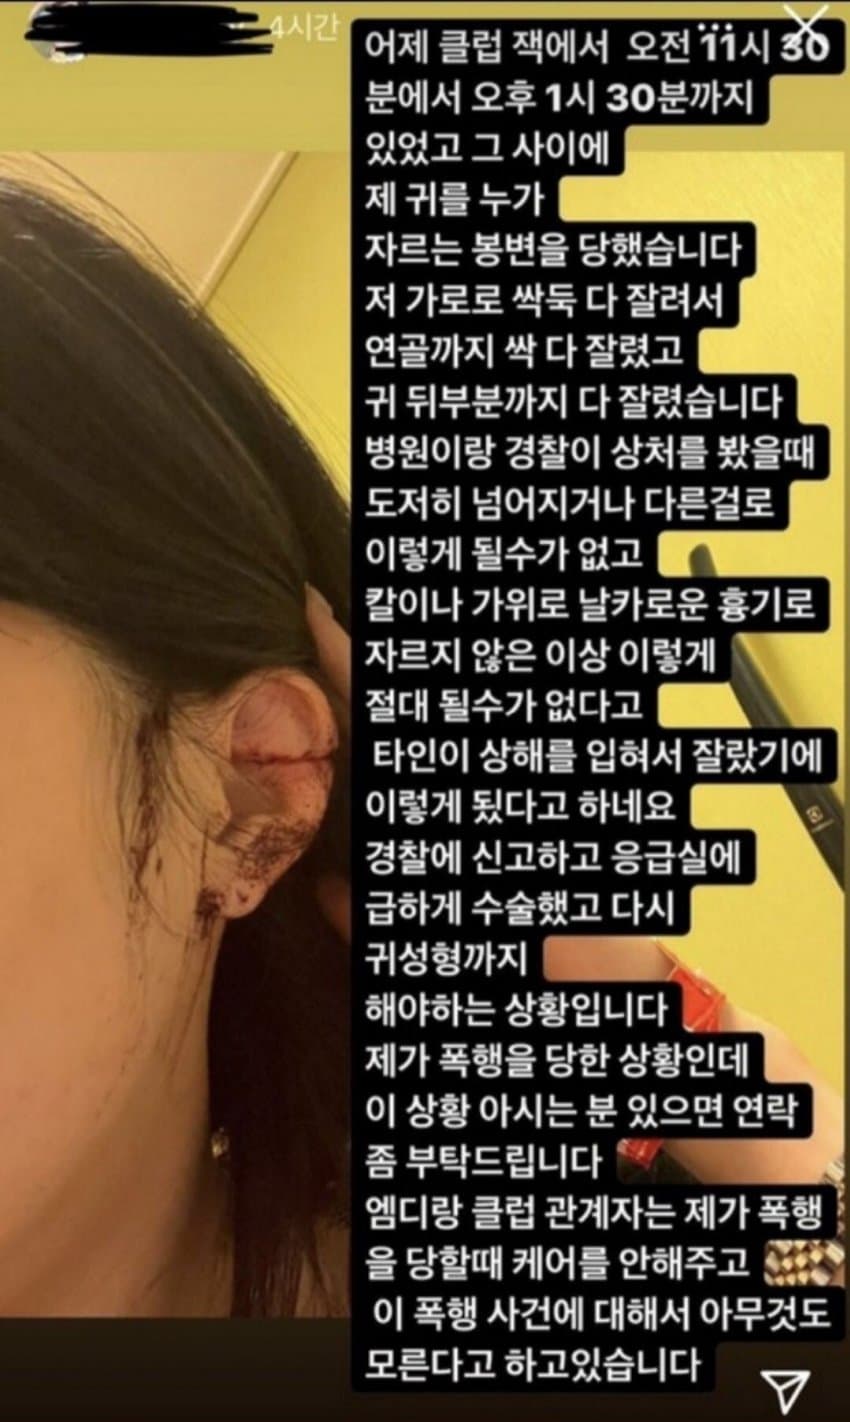 A woman whose ears were cut off at a club in Gangnam.